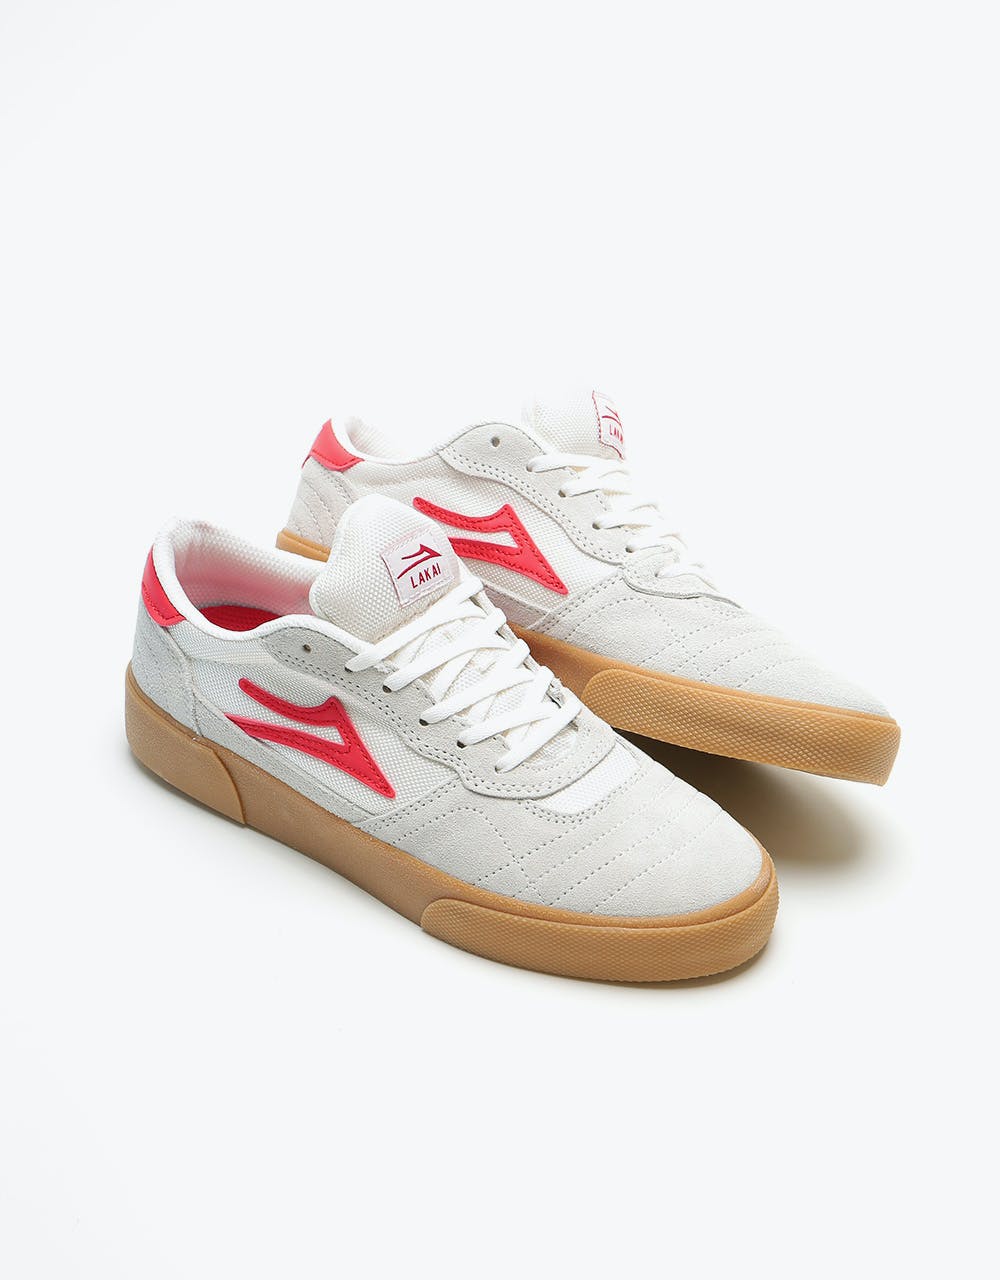 Lakai Cambridge Skate Shoes - White/Red Suede